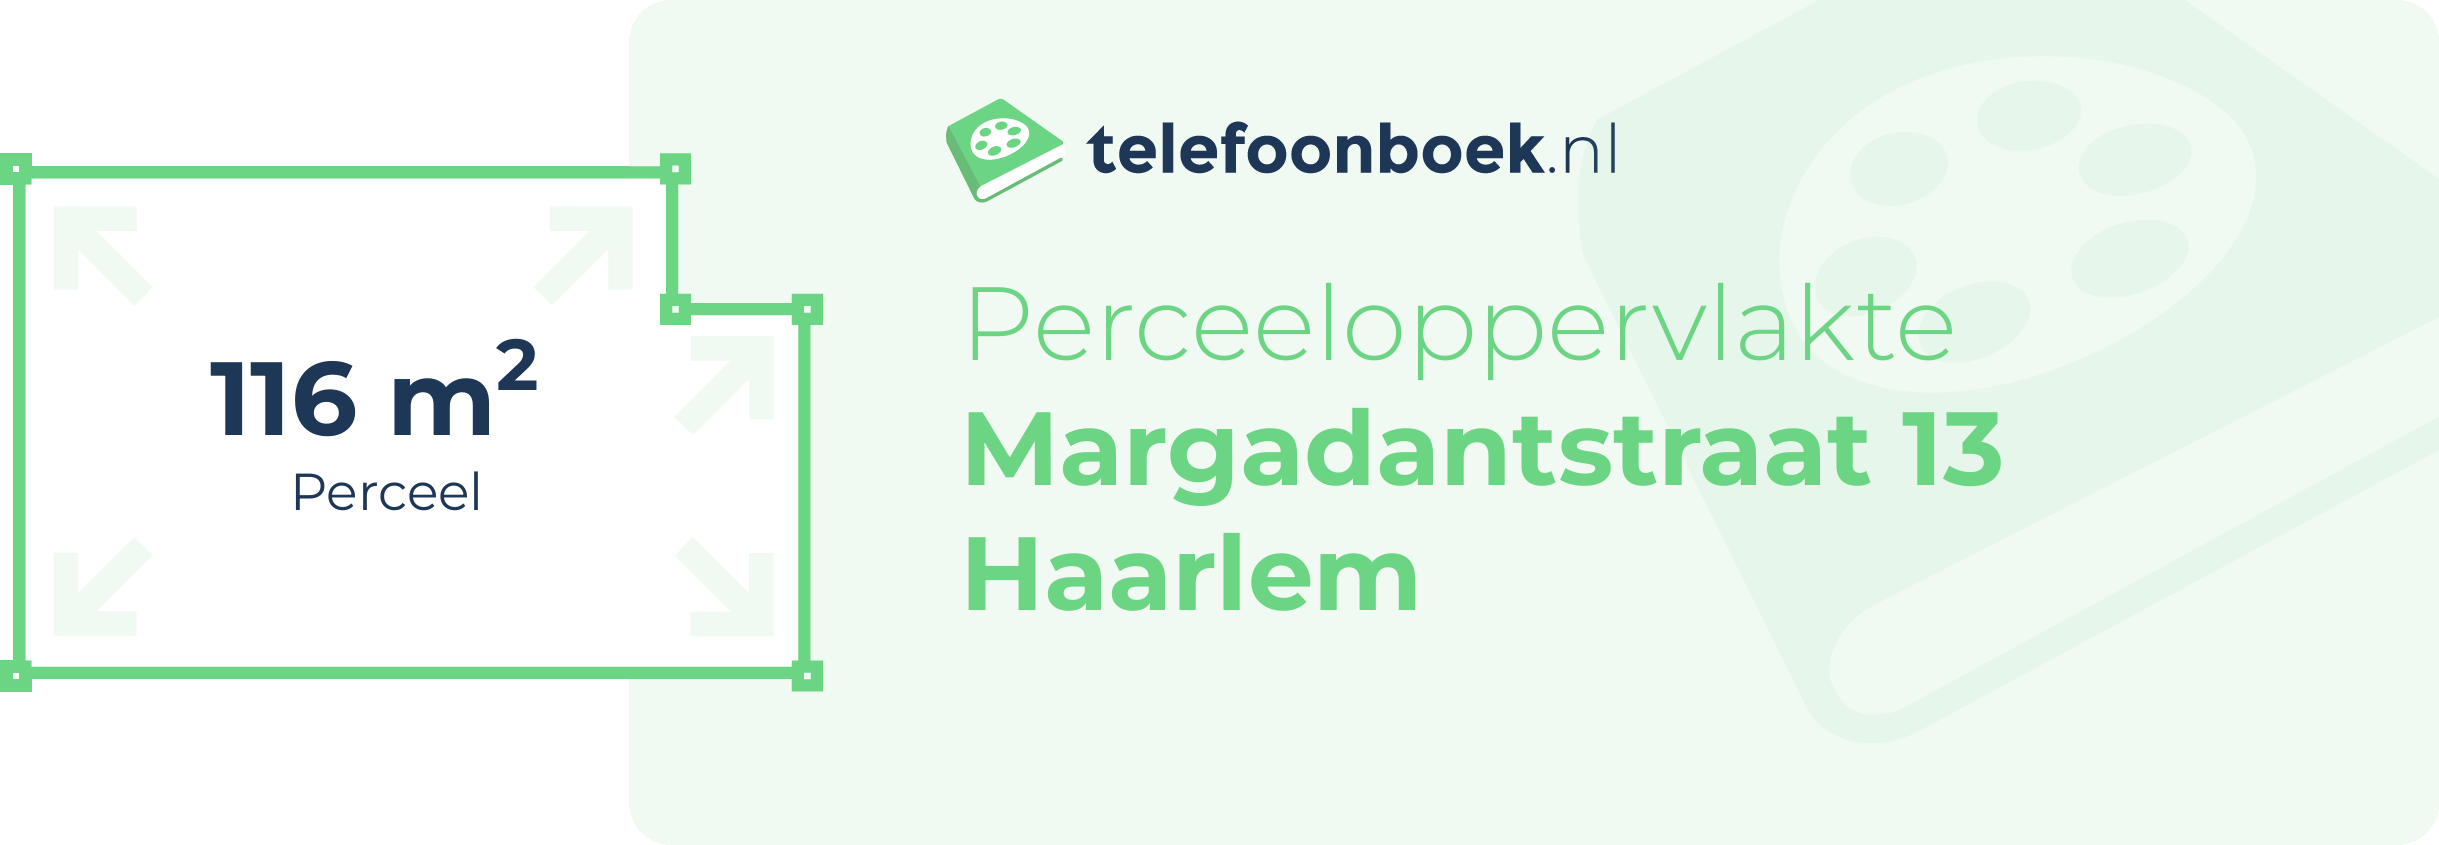 Perceeloppervlakte Margadantstraat 13 Haarlem